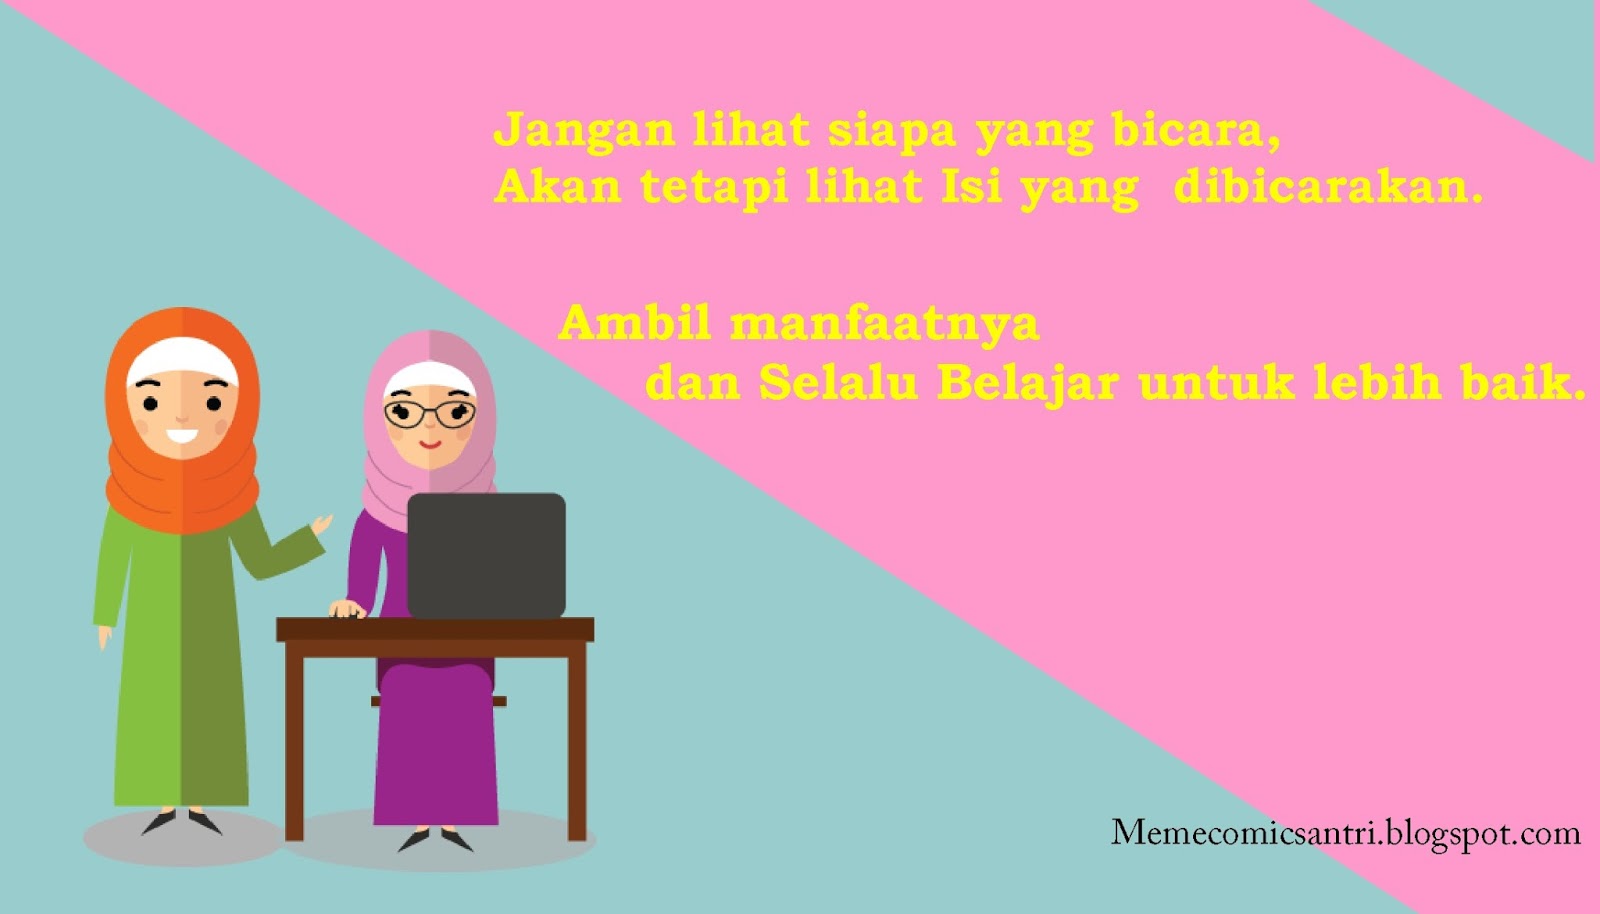 Kumpulan Gambar Animasi Muslimah Dengan Kata Kata Kata Kata